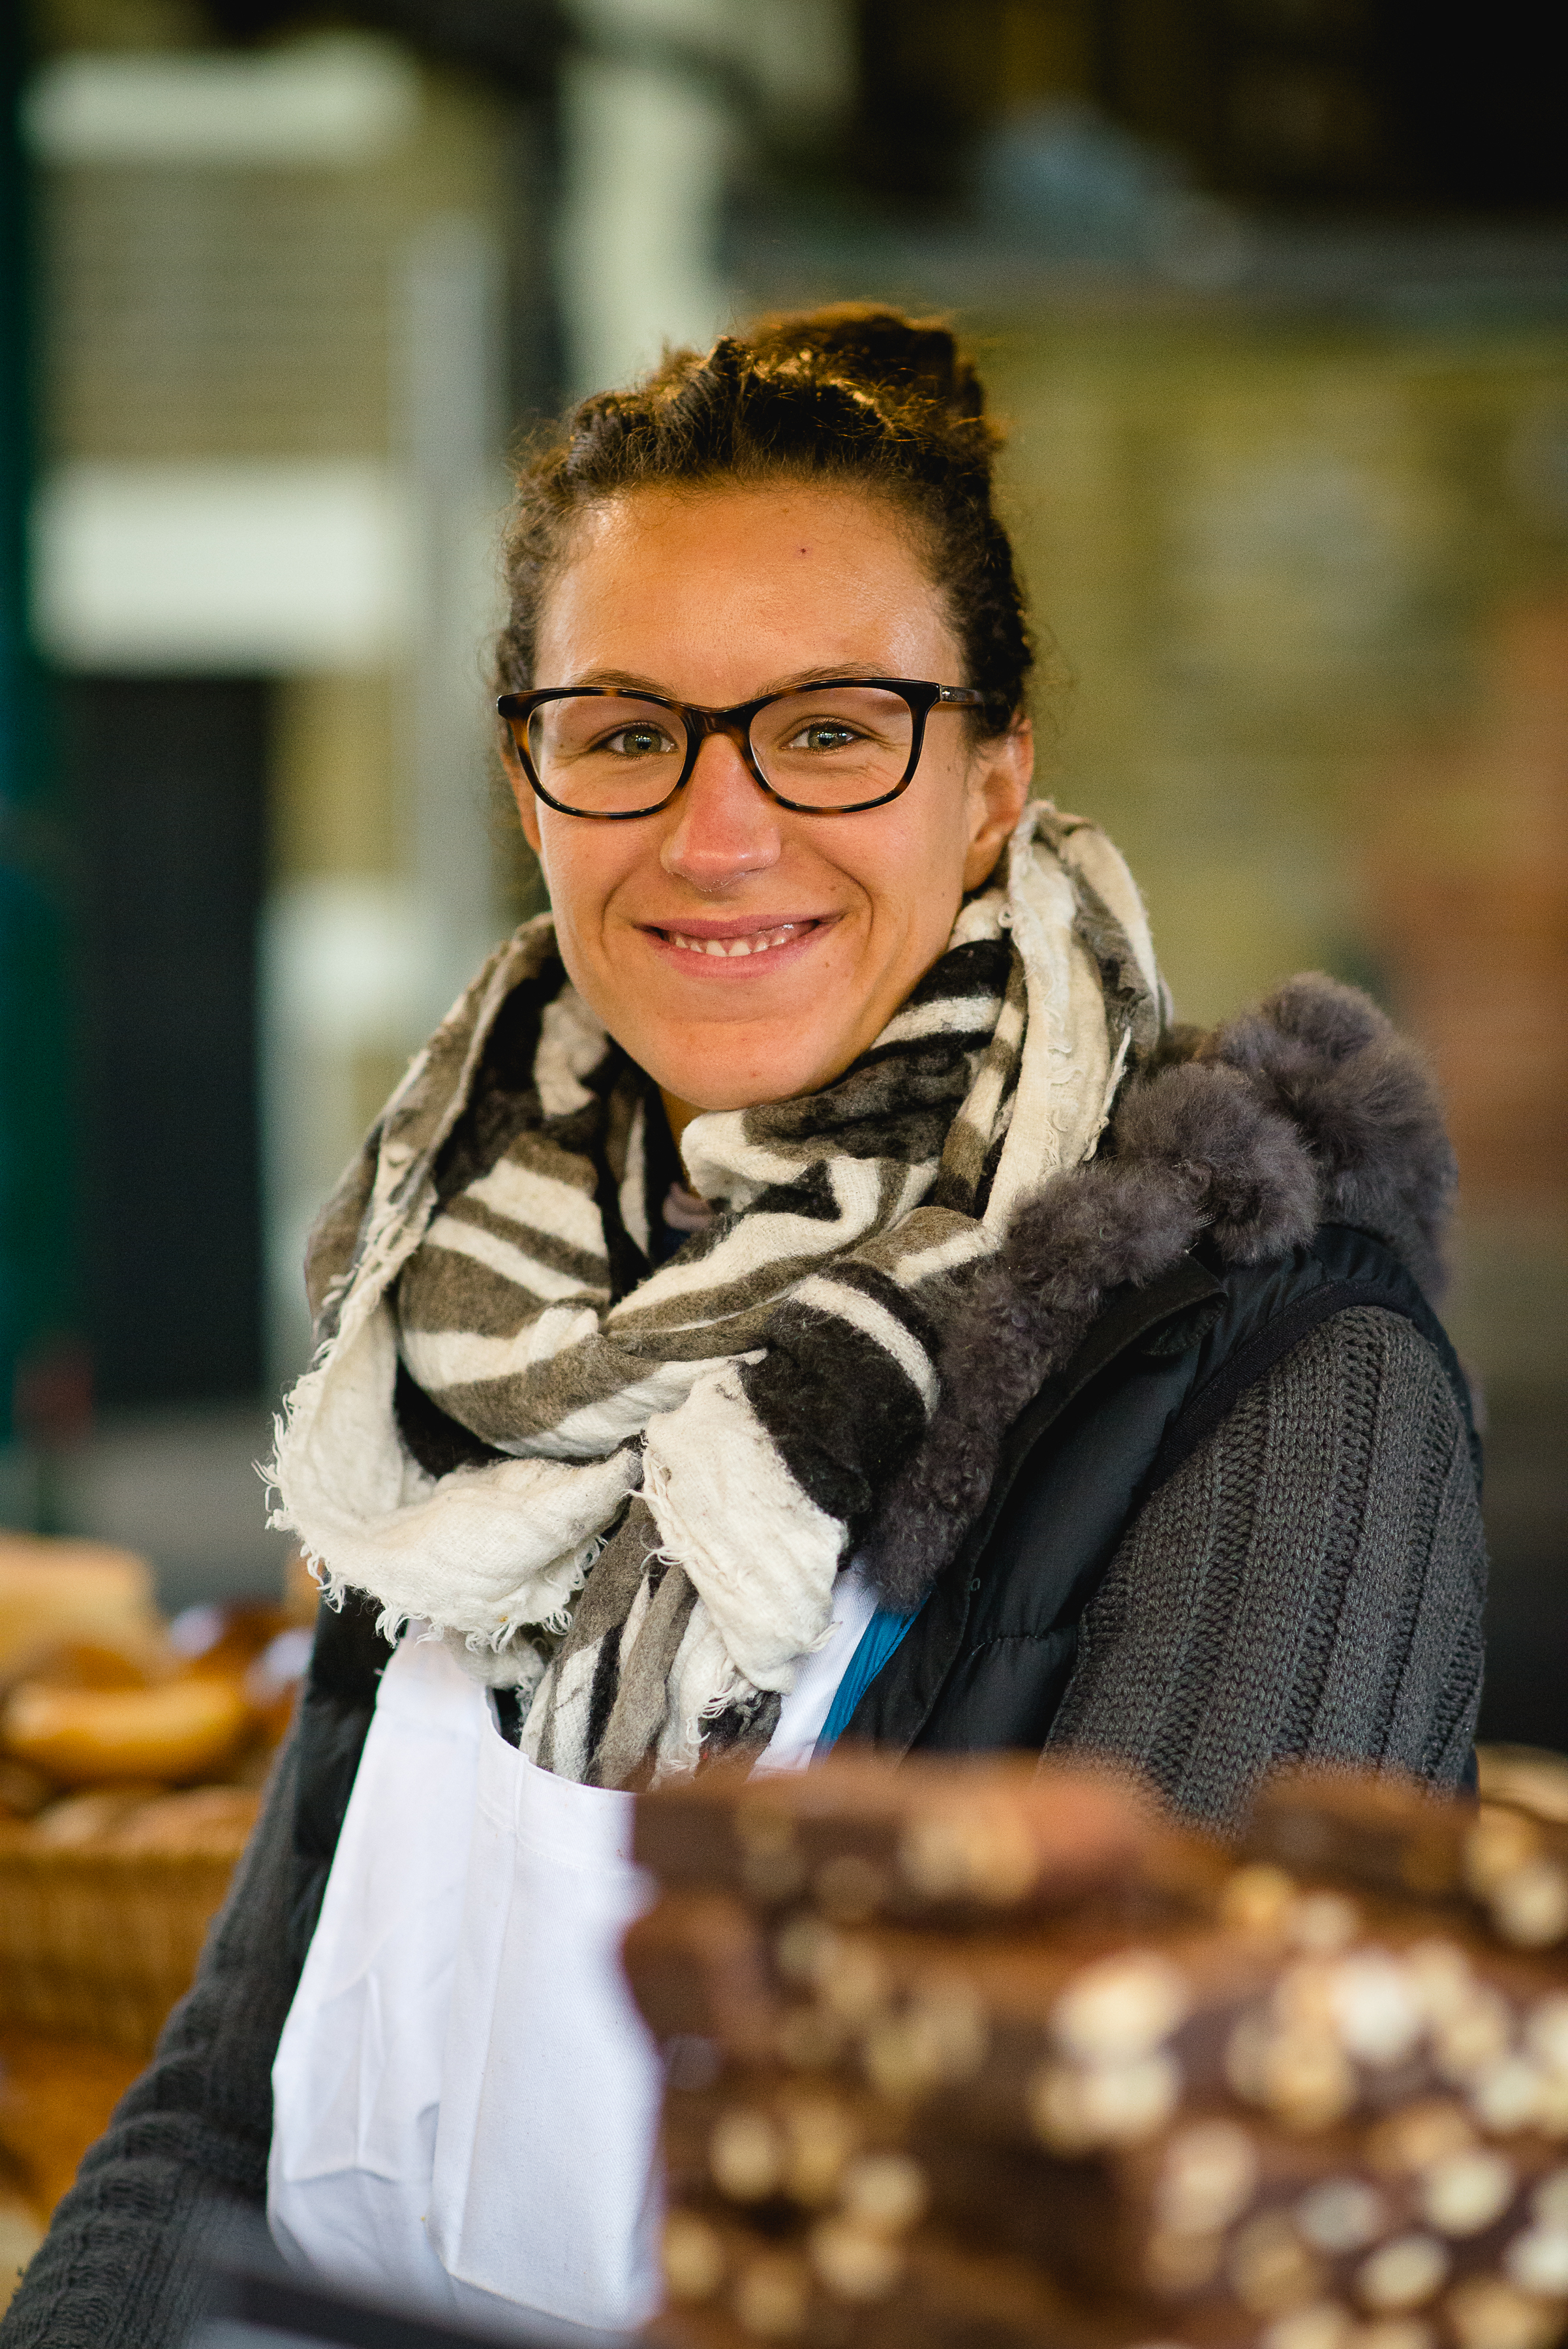 Bread Ahead stall Borough Market - London Food Photographer 